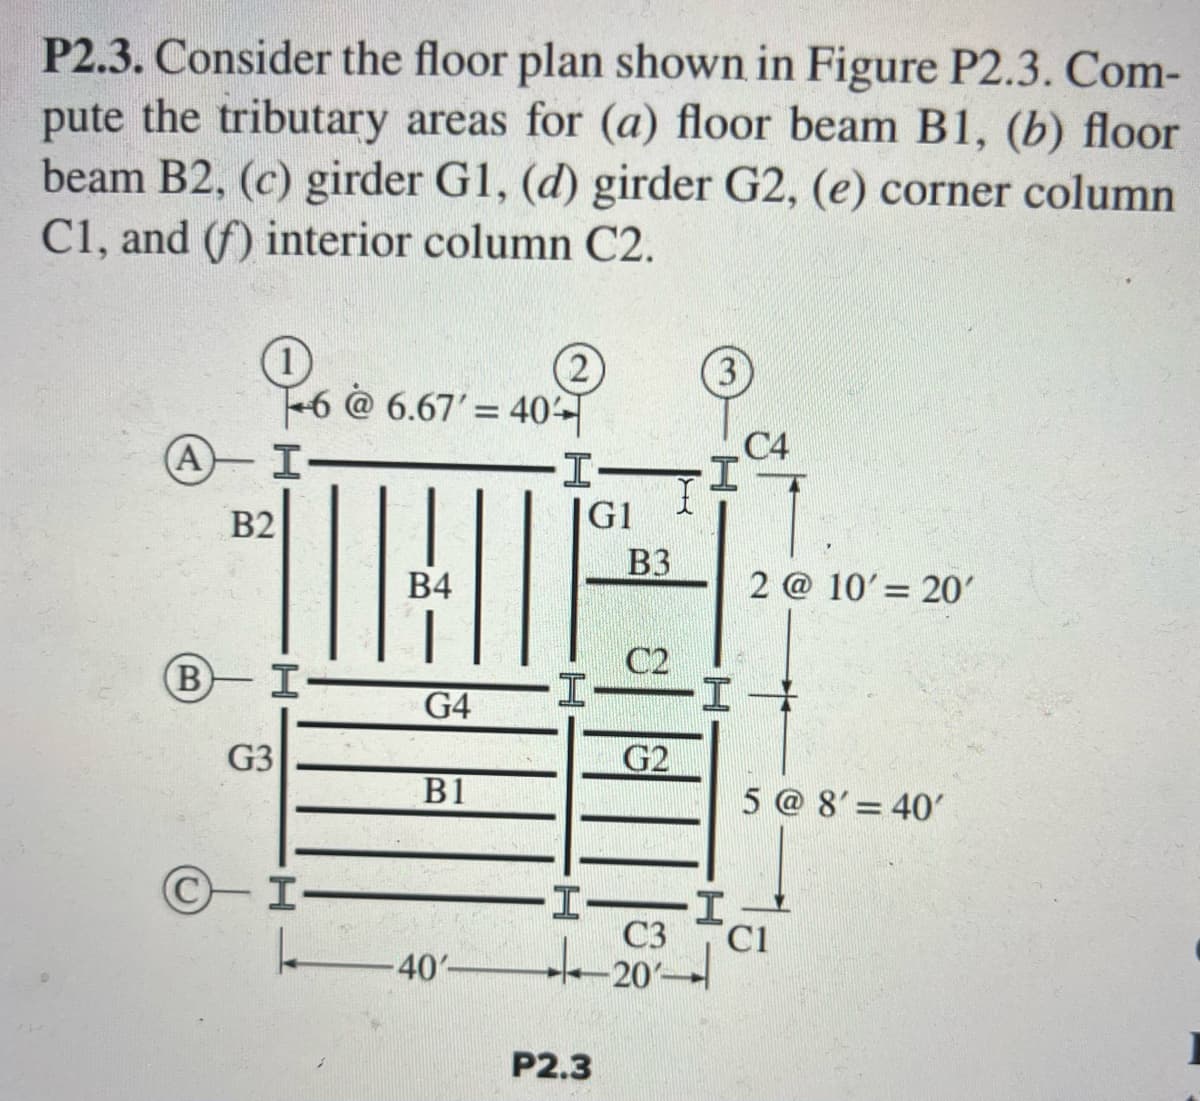 P2.3. Consider the floor plan shown in Figure P2.3. Com-
pute the tributary areas for (a) floor beam B1, (b) floor
beam B2, (c) girder G1, (d) girder G2, (e) corner column
C1, and (f) interior column C2.
(A) I
B2
(B)
I
G3
C-I
6 @6.67' = 404
I
B4
G4
B1
-40'-
I
I
G1
P2.3
B3
C2
G2
(3
C3
20-
I
I
I
C4
2 @ 10' 20'
=
5 @ 8' 40'
C1